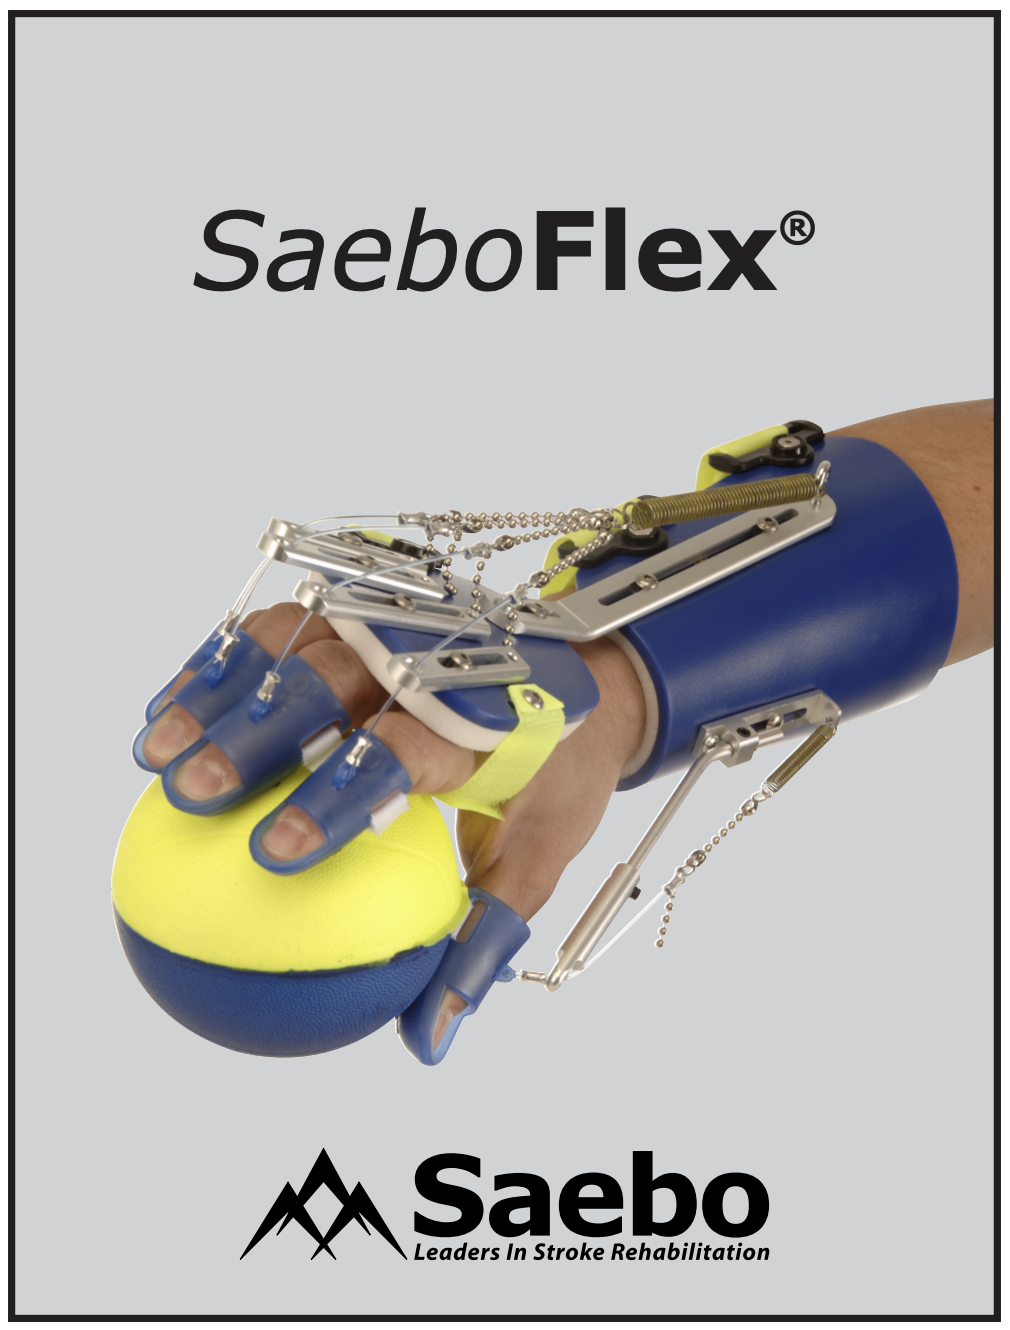 SaeboFlex User Manual